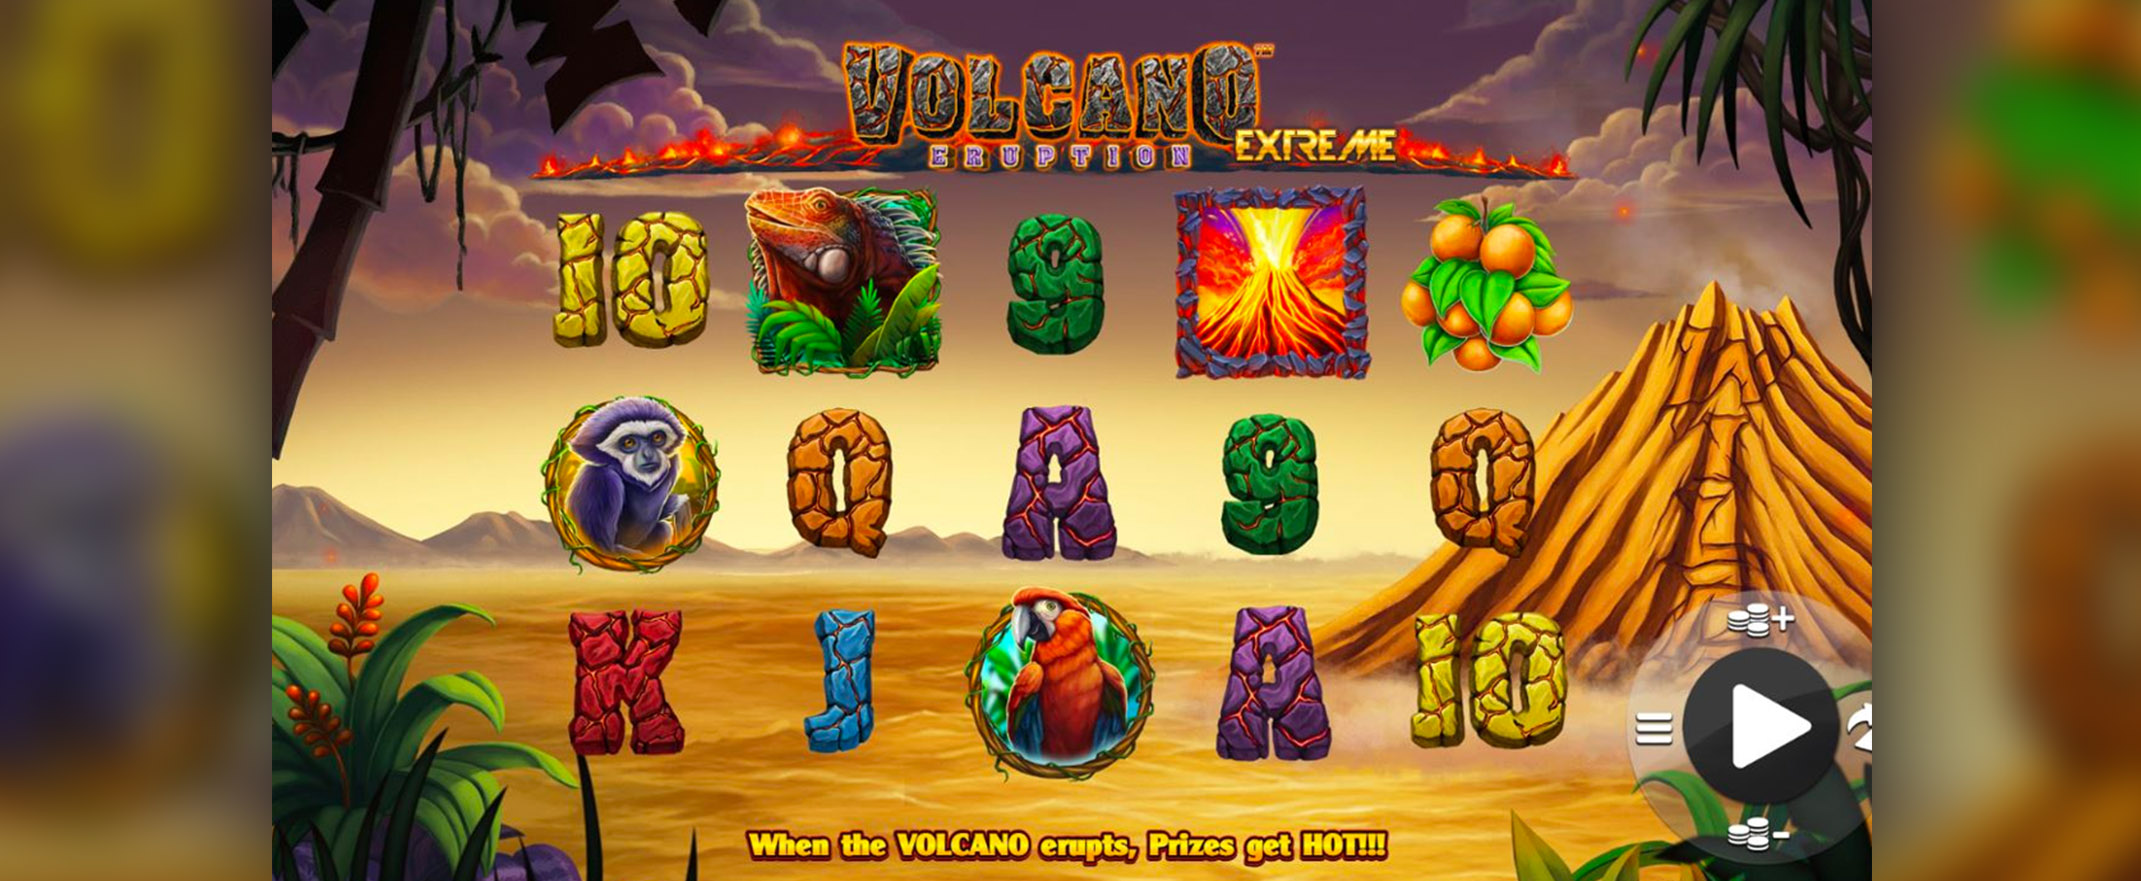 Volcano Eruption Extreme spel NextGen